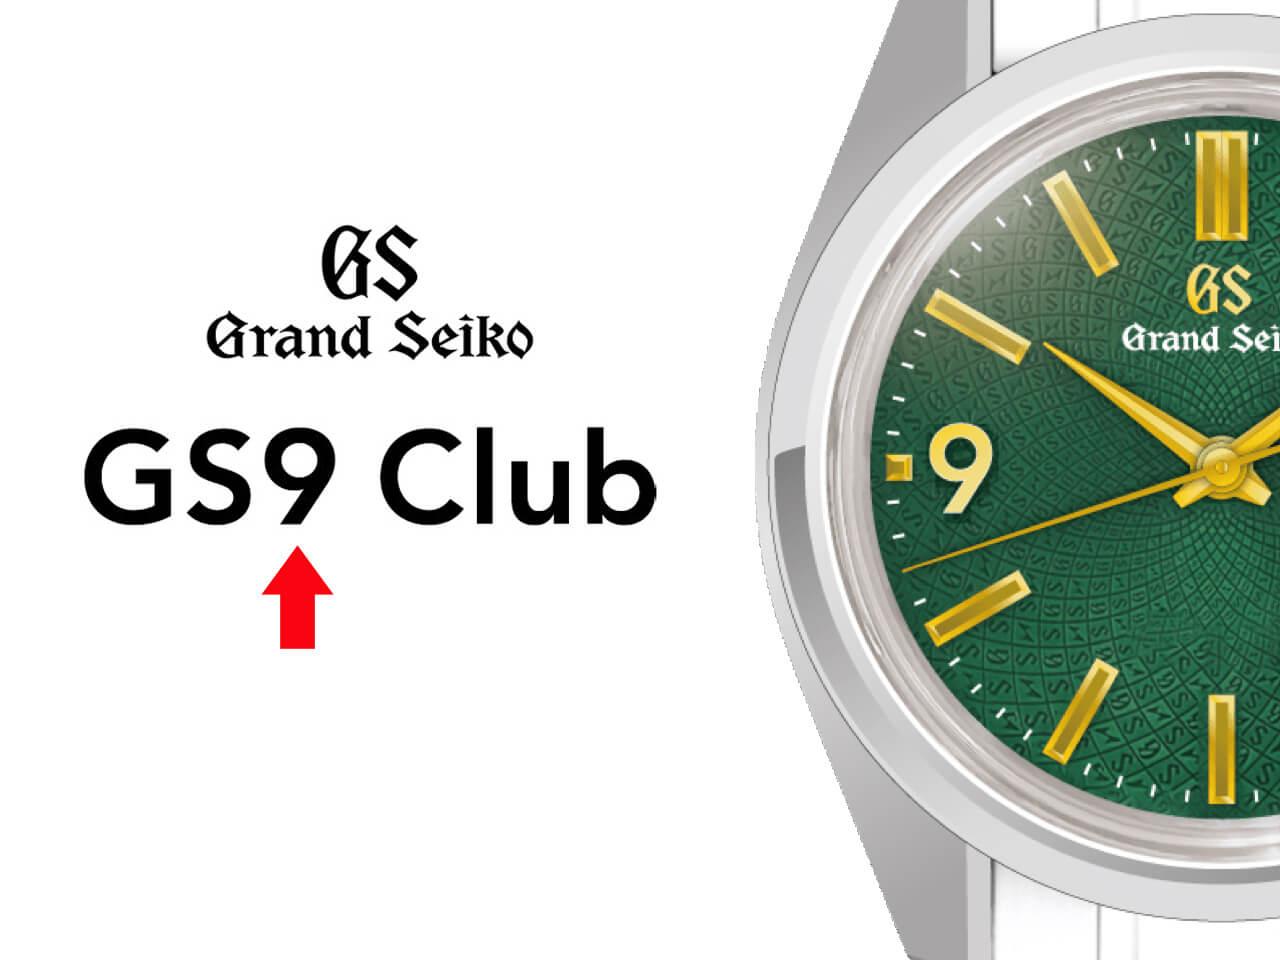 「GS9 Club オリジナルモデル」インデックスの「9」